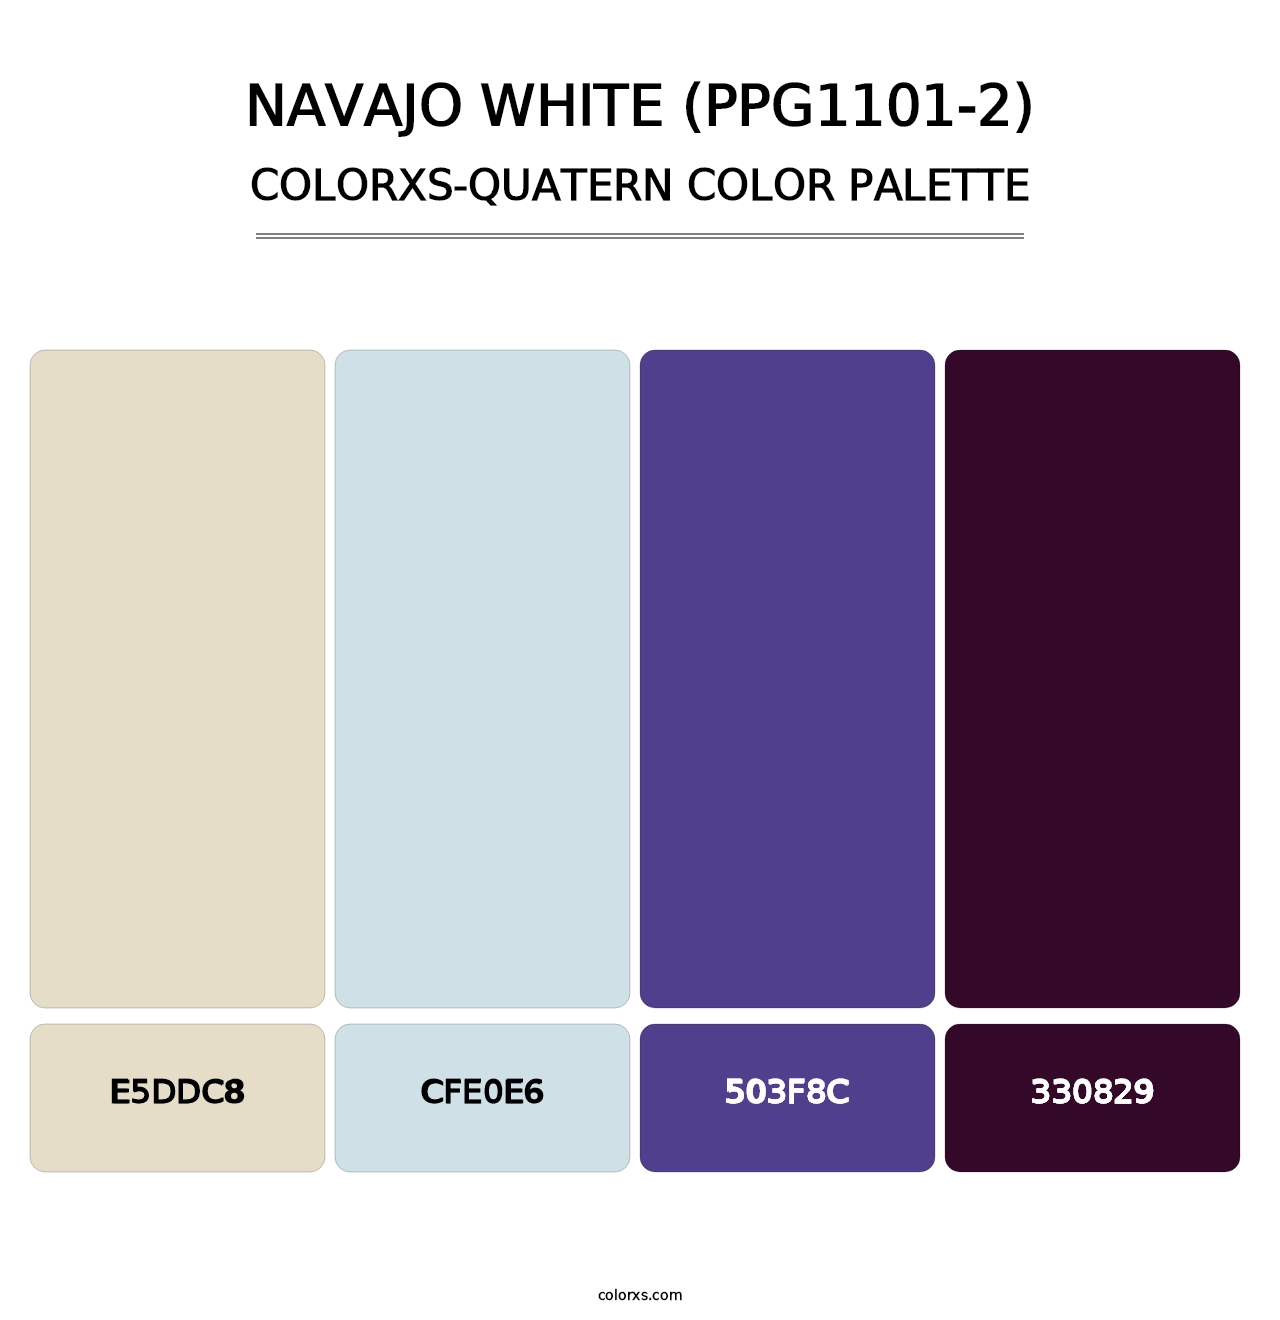 Navajo White (PPG1101-2) - Colorxs Quatern Palette